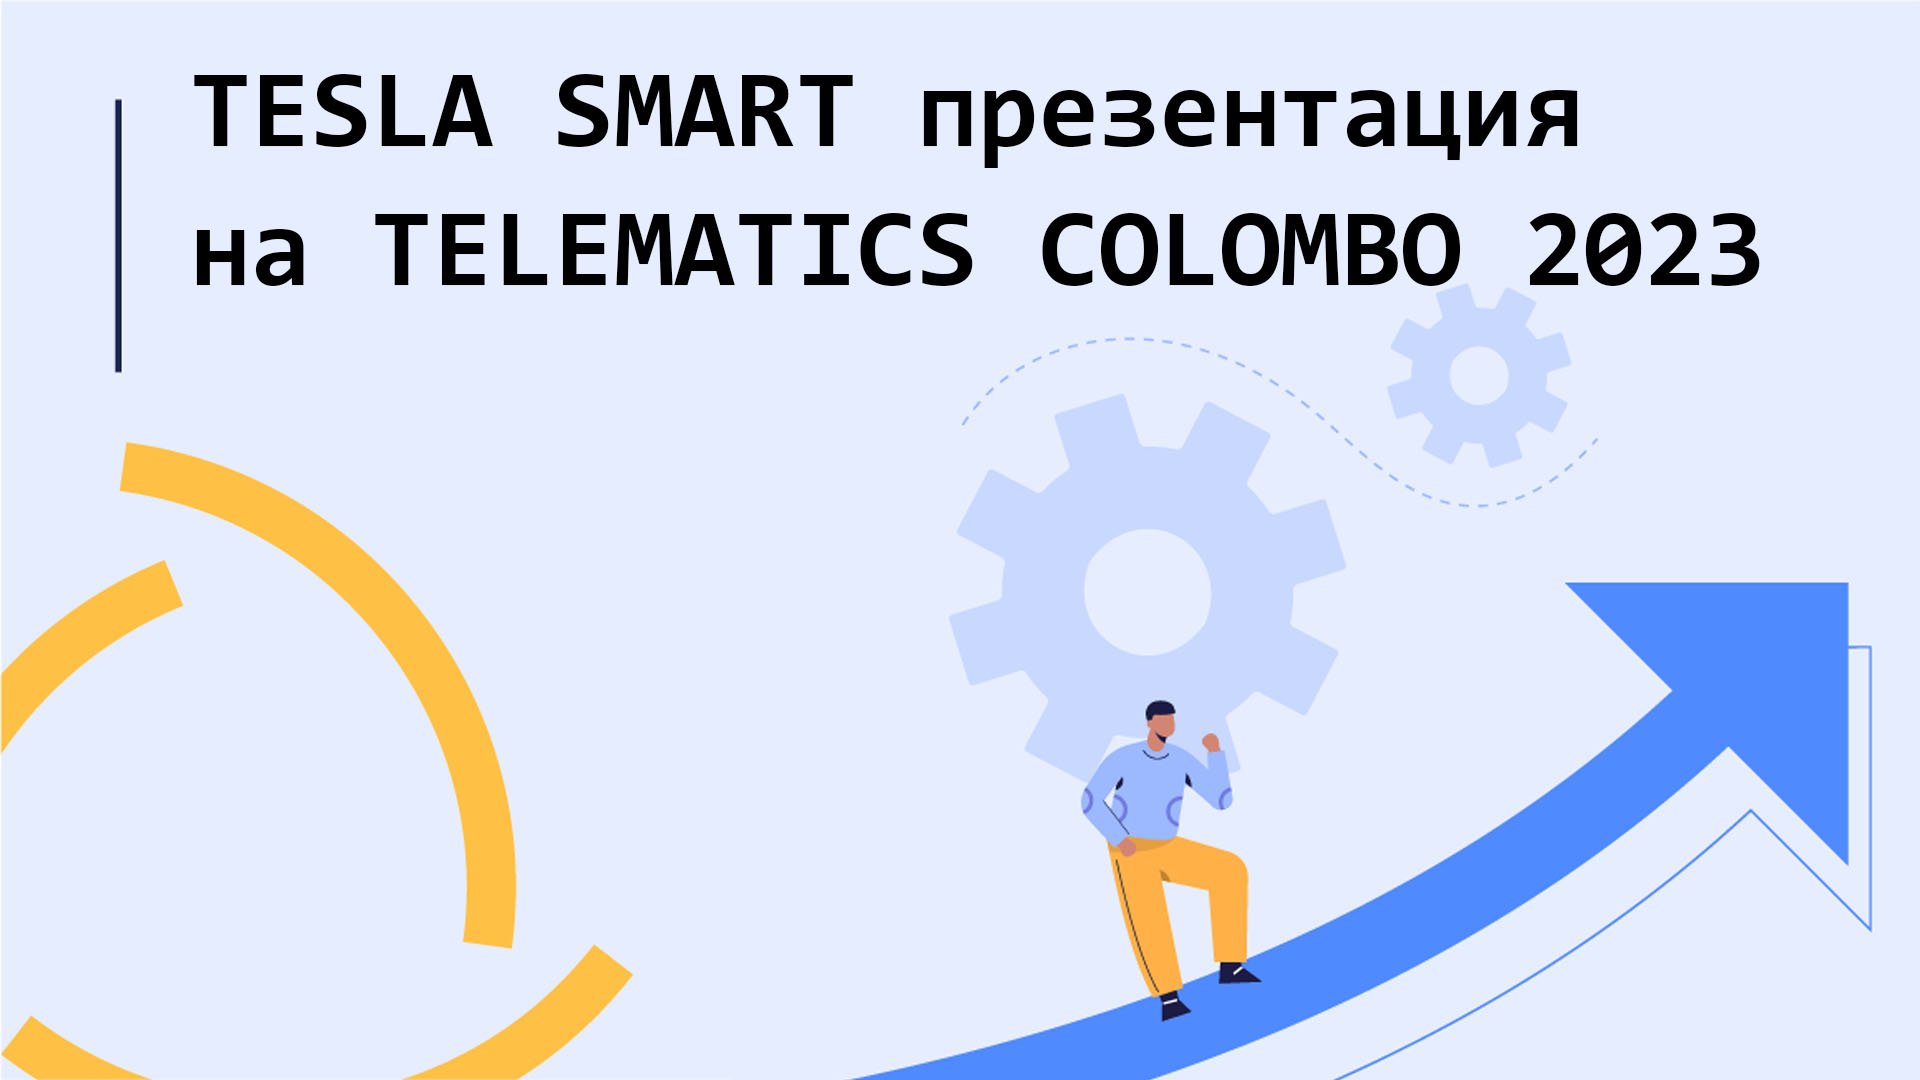 TESLA SMART на конференции TELEMATICS COLOMBO 2023